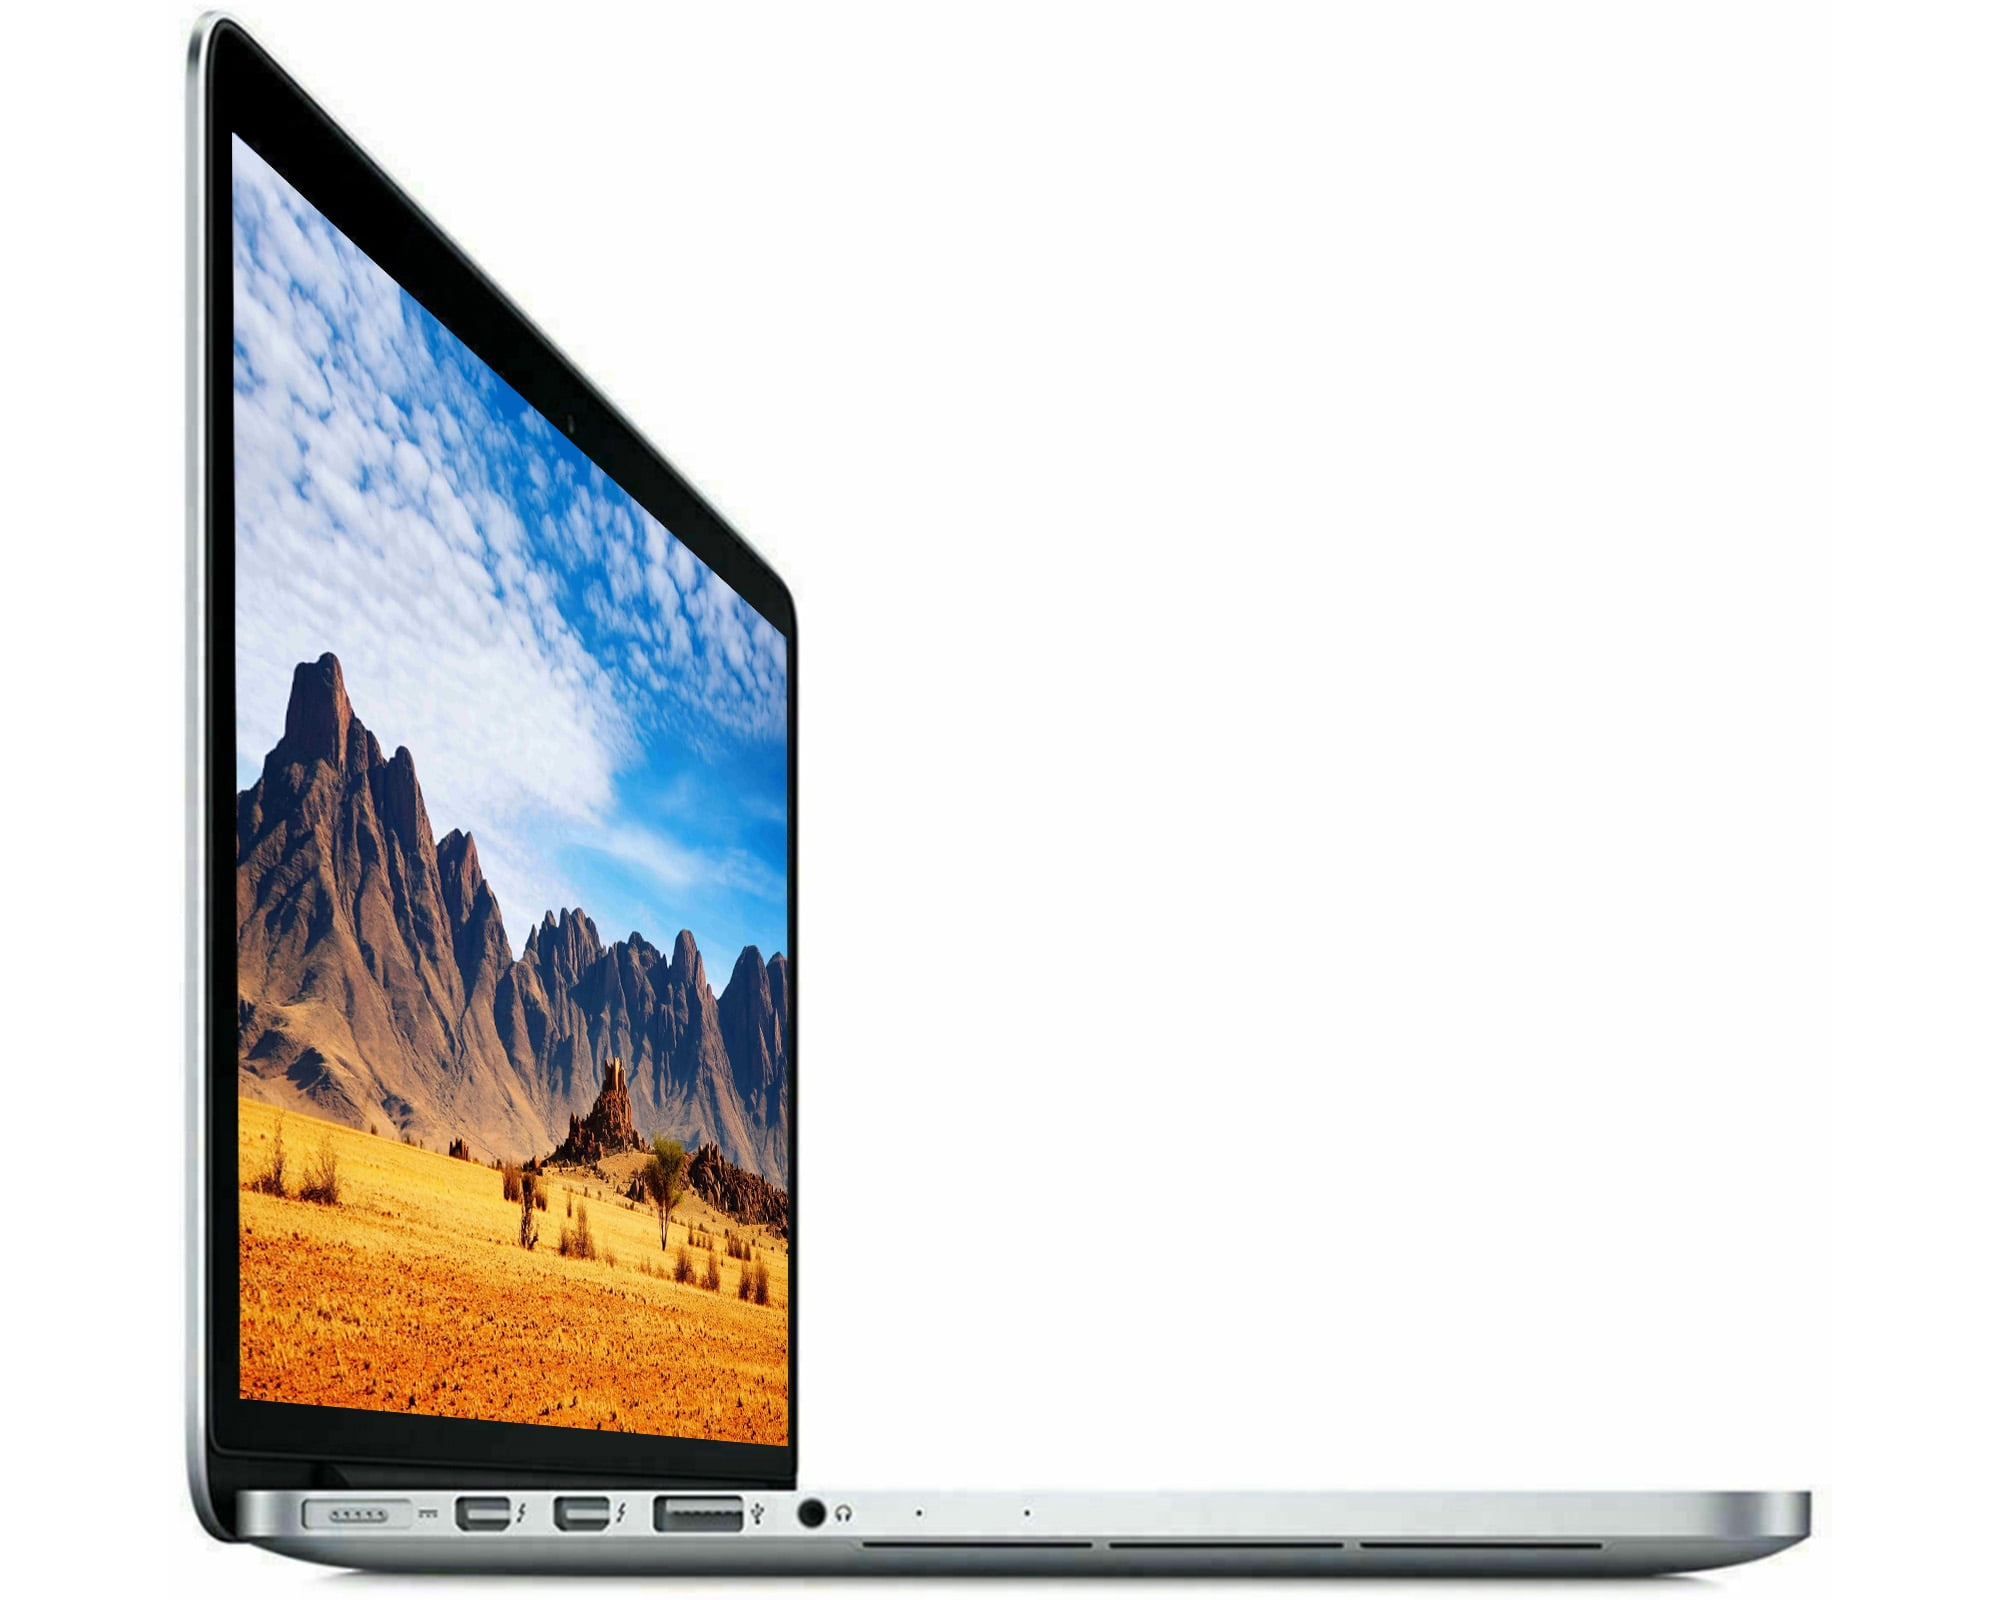 Restored Apple MacBook Pro MD101LL/A 13.3-inch Laptop (2.5Ghz, 4GB